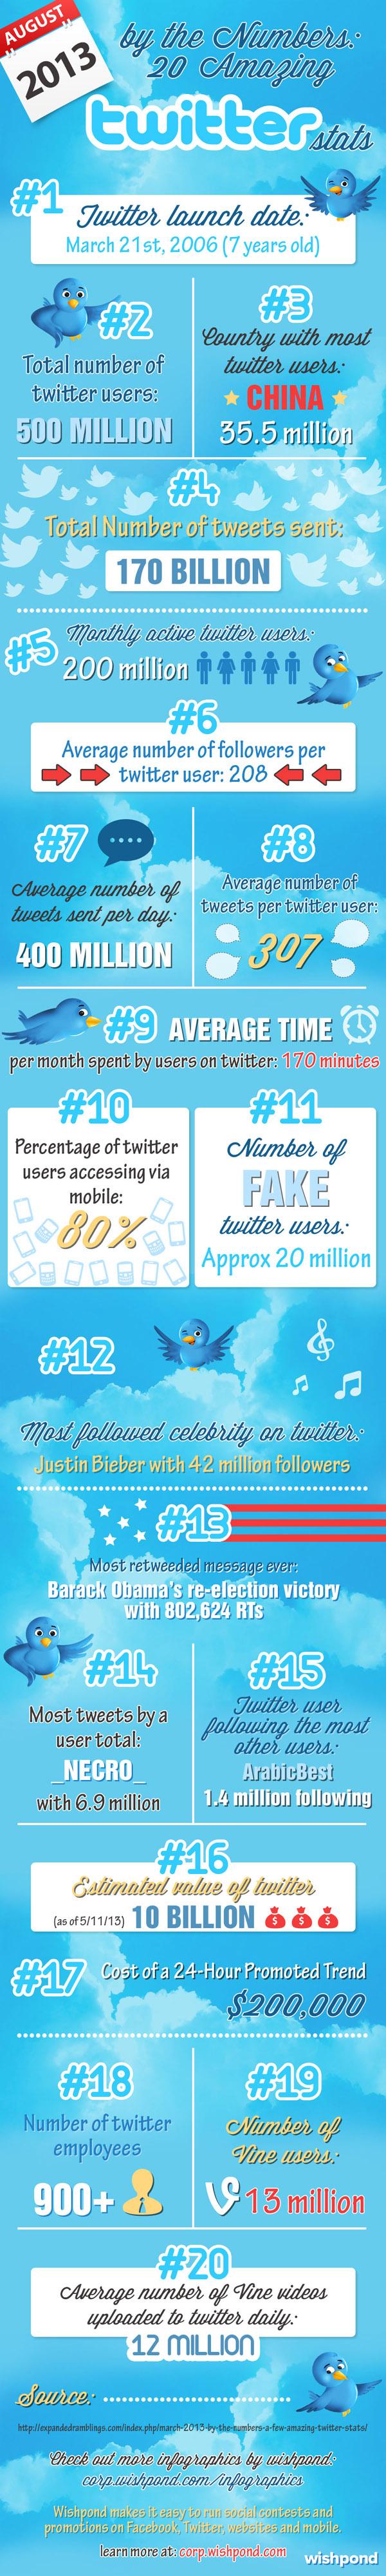 Estadísticas de Twitter Agosto del 2013 #Infografia #Twitter #RedesSociales